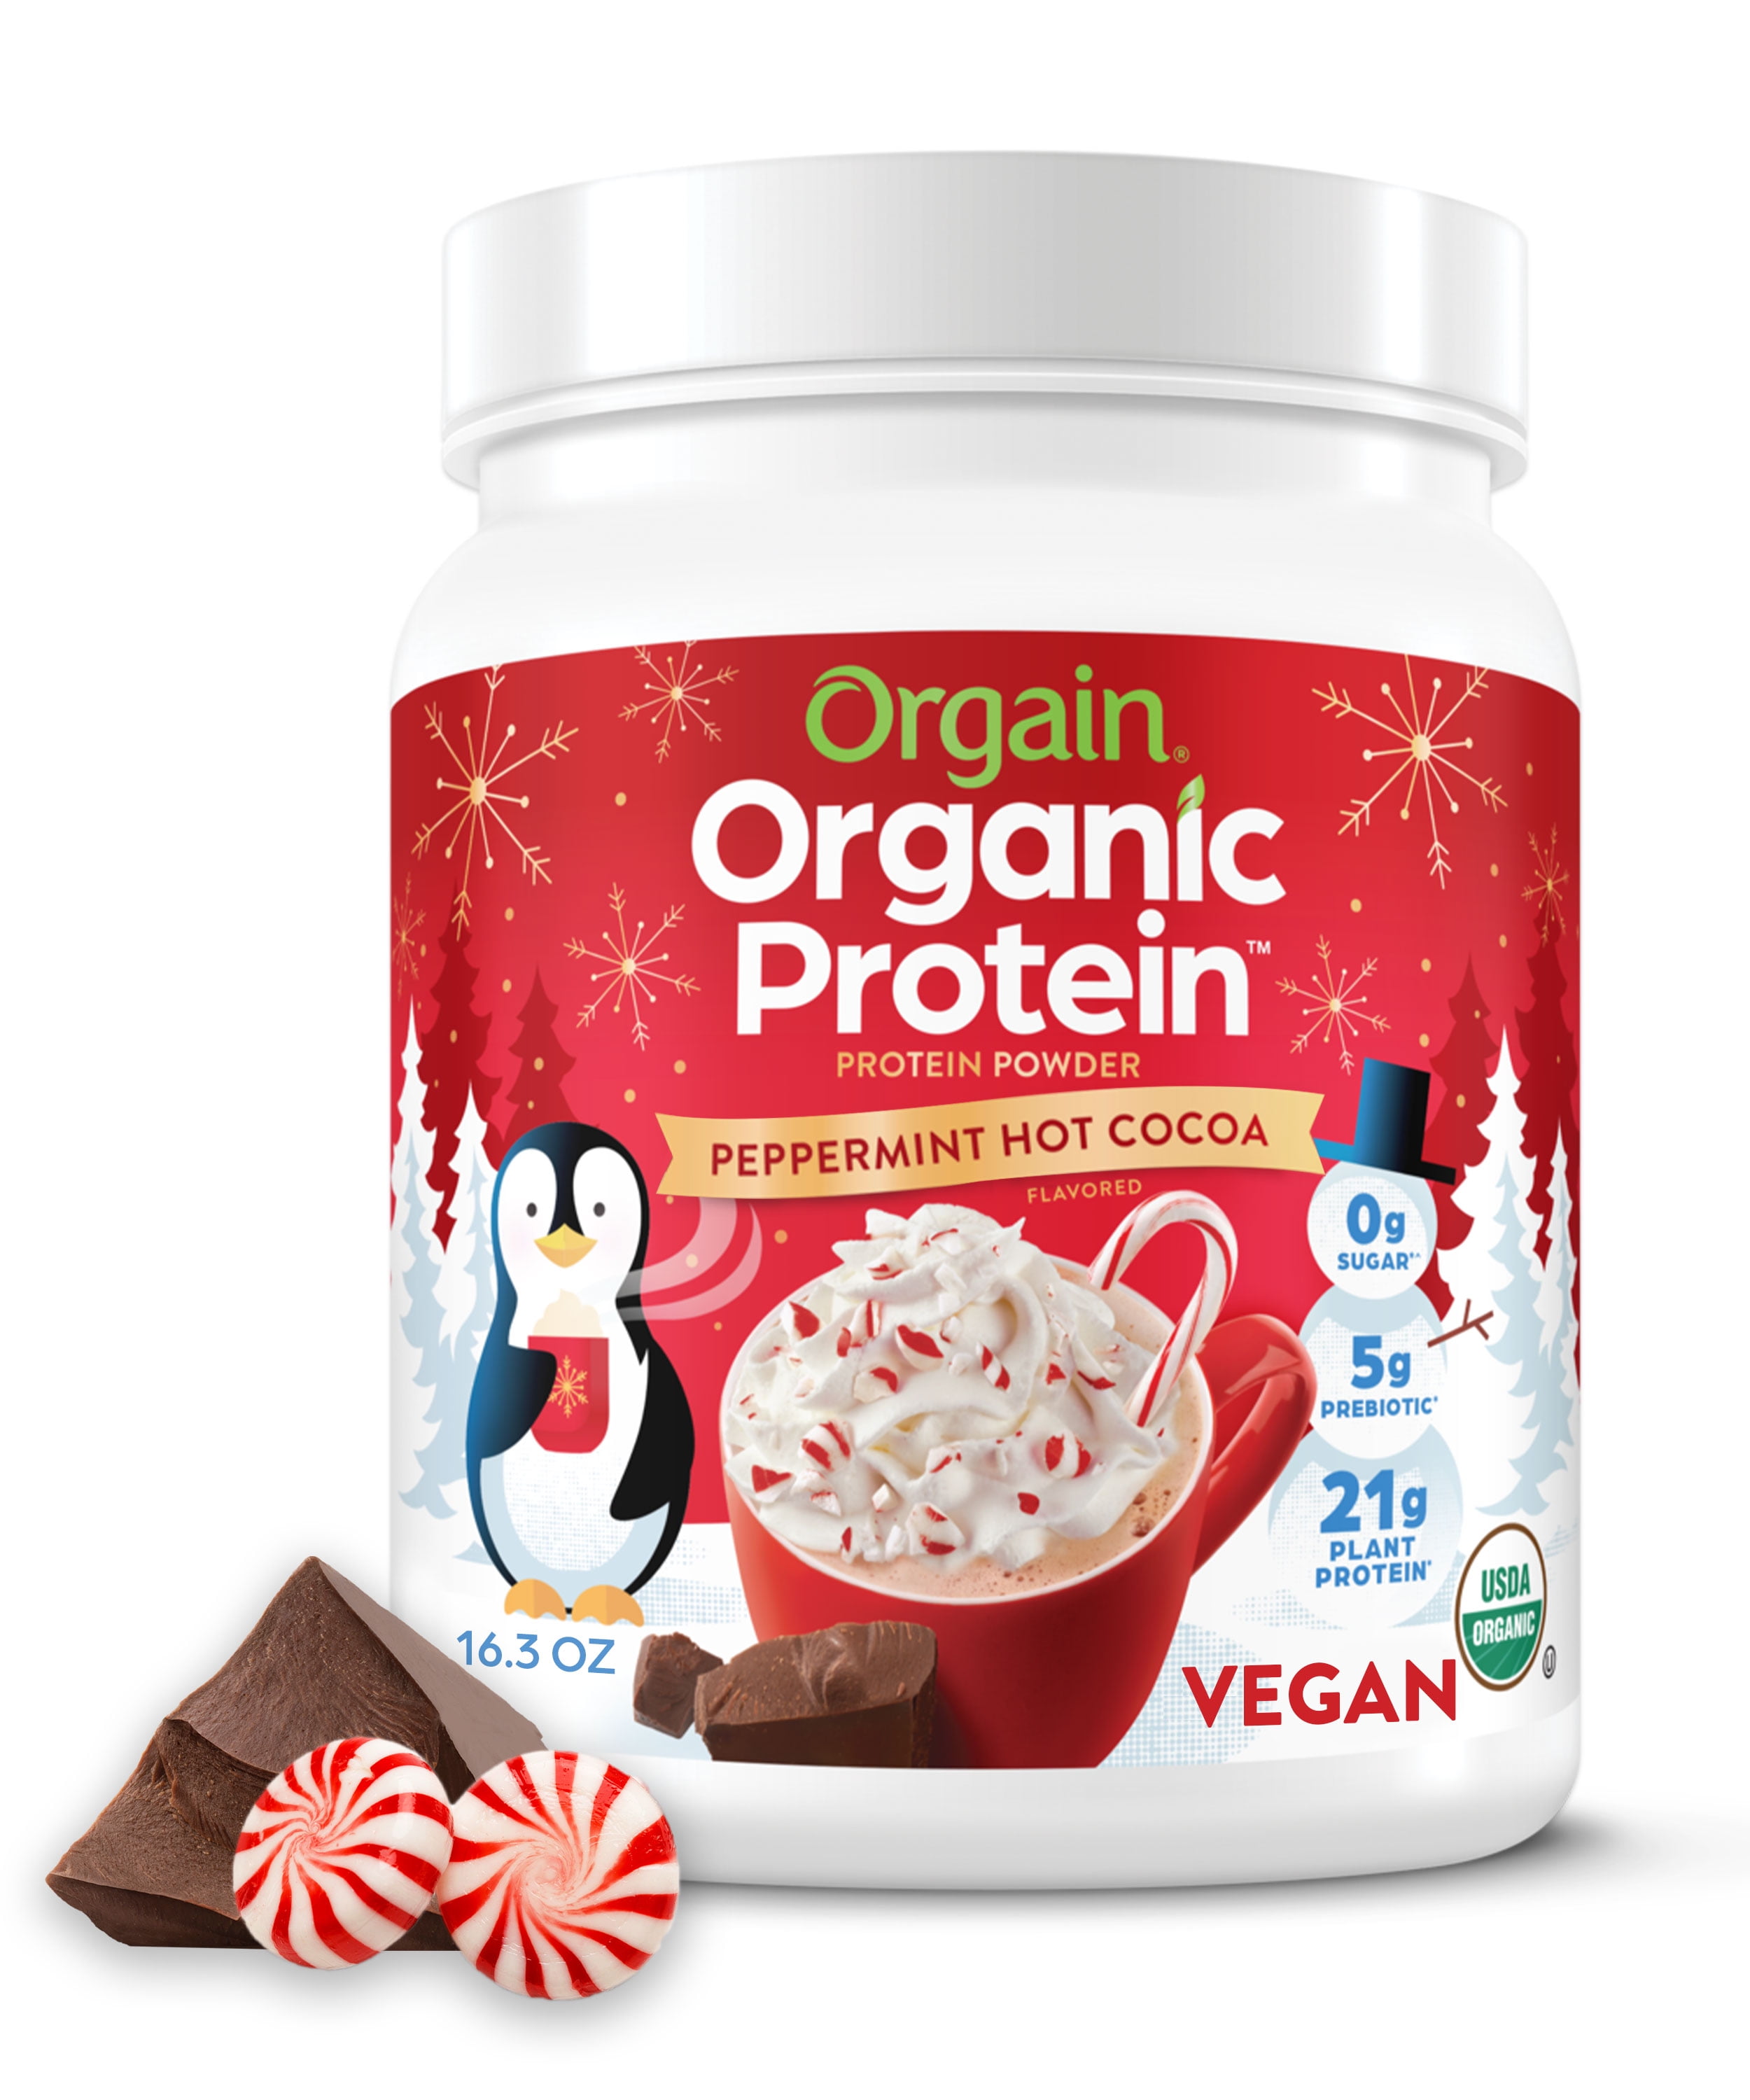 Orgain Organic Vegan 21g Protein Powder Packets, Travel Size-Chocolate, 10ct